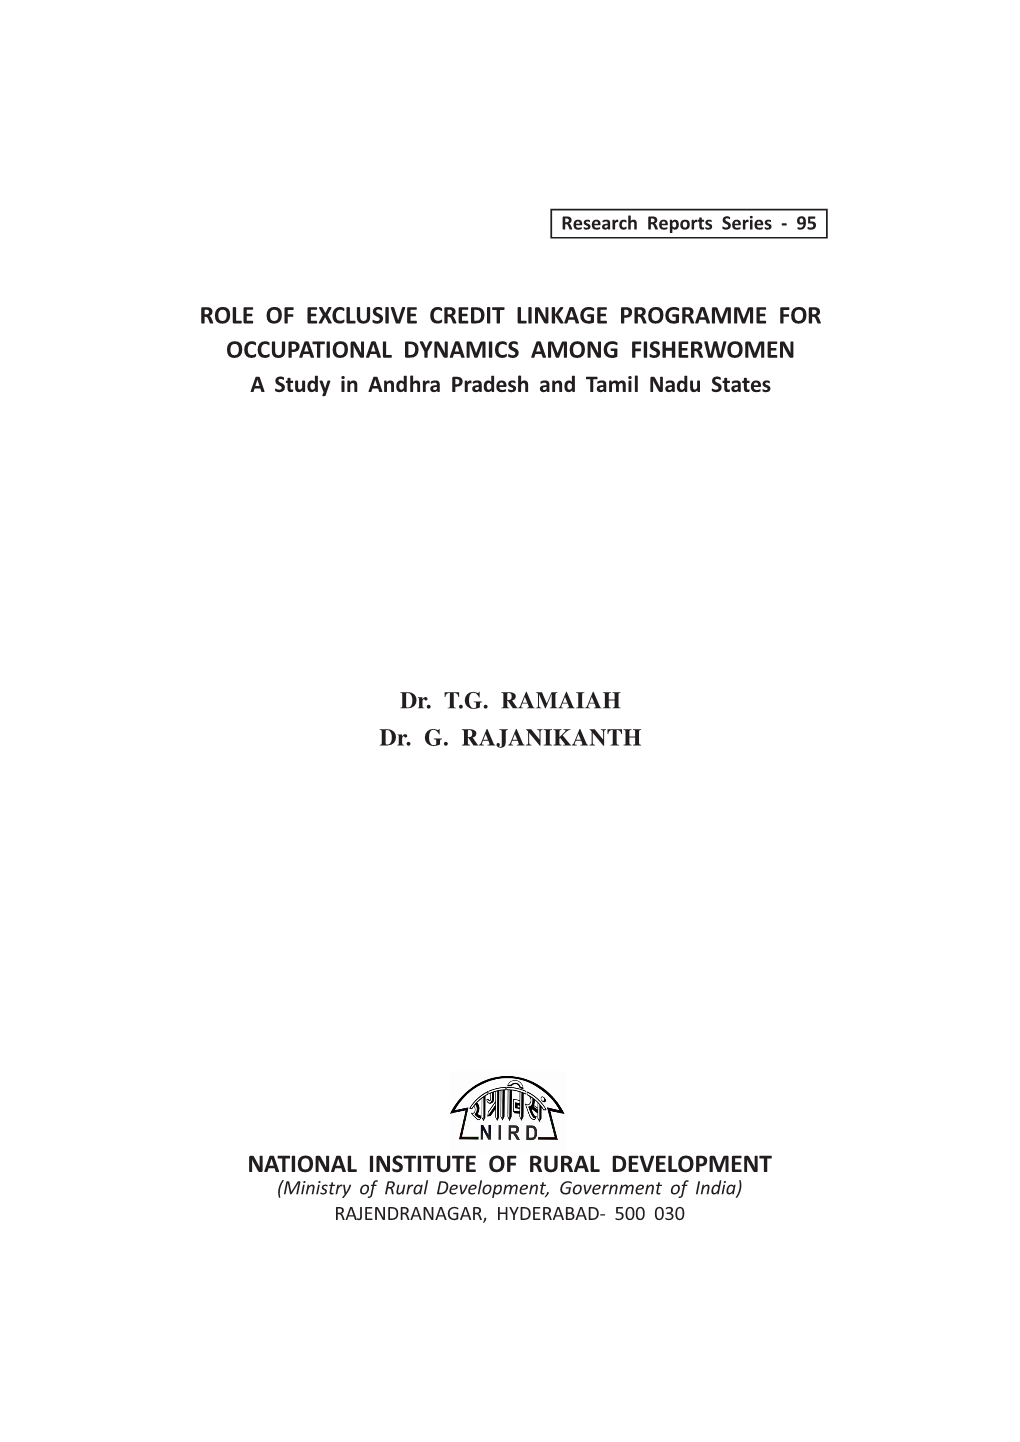 A Study in Andhra Pradesh and Tamil Nadu States